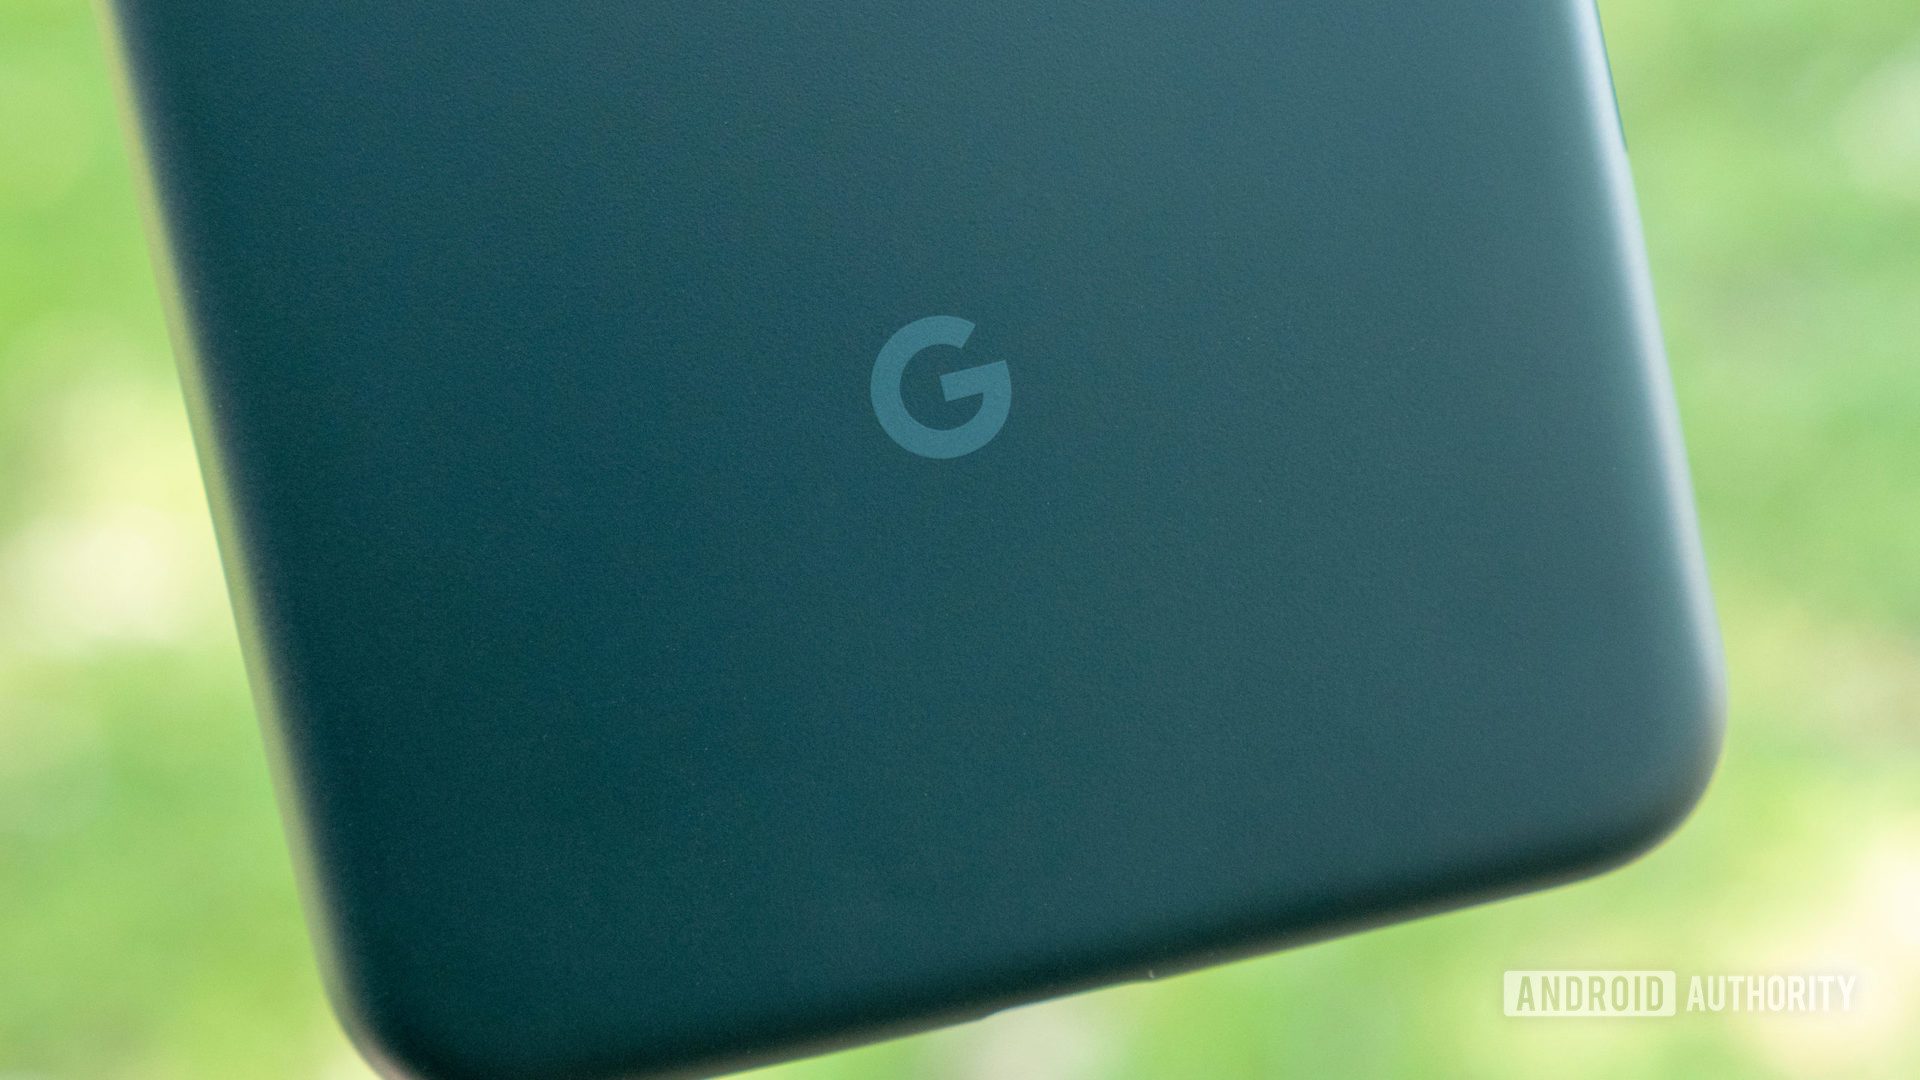 Google Pixel 5A close-up of the Google logo